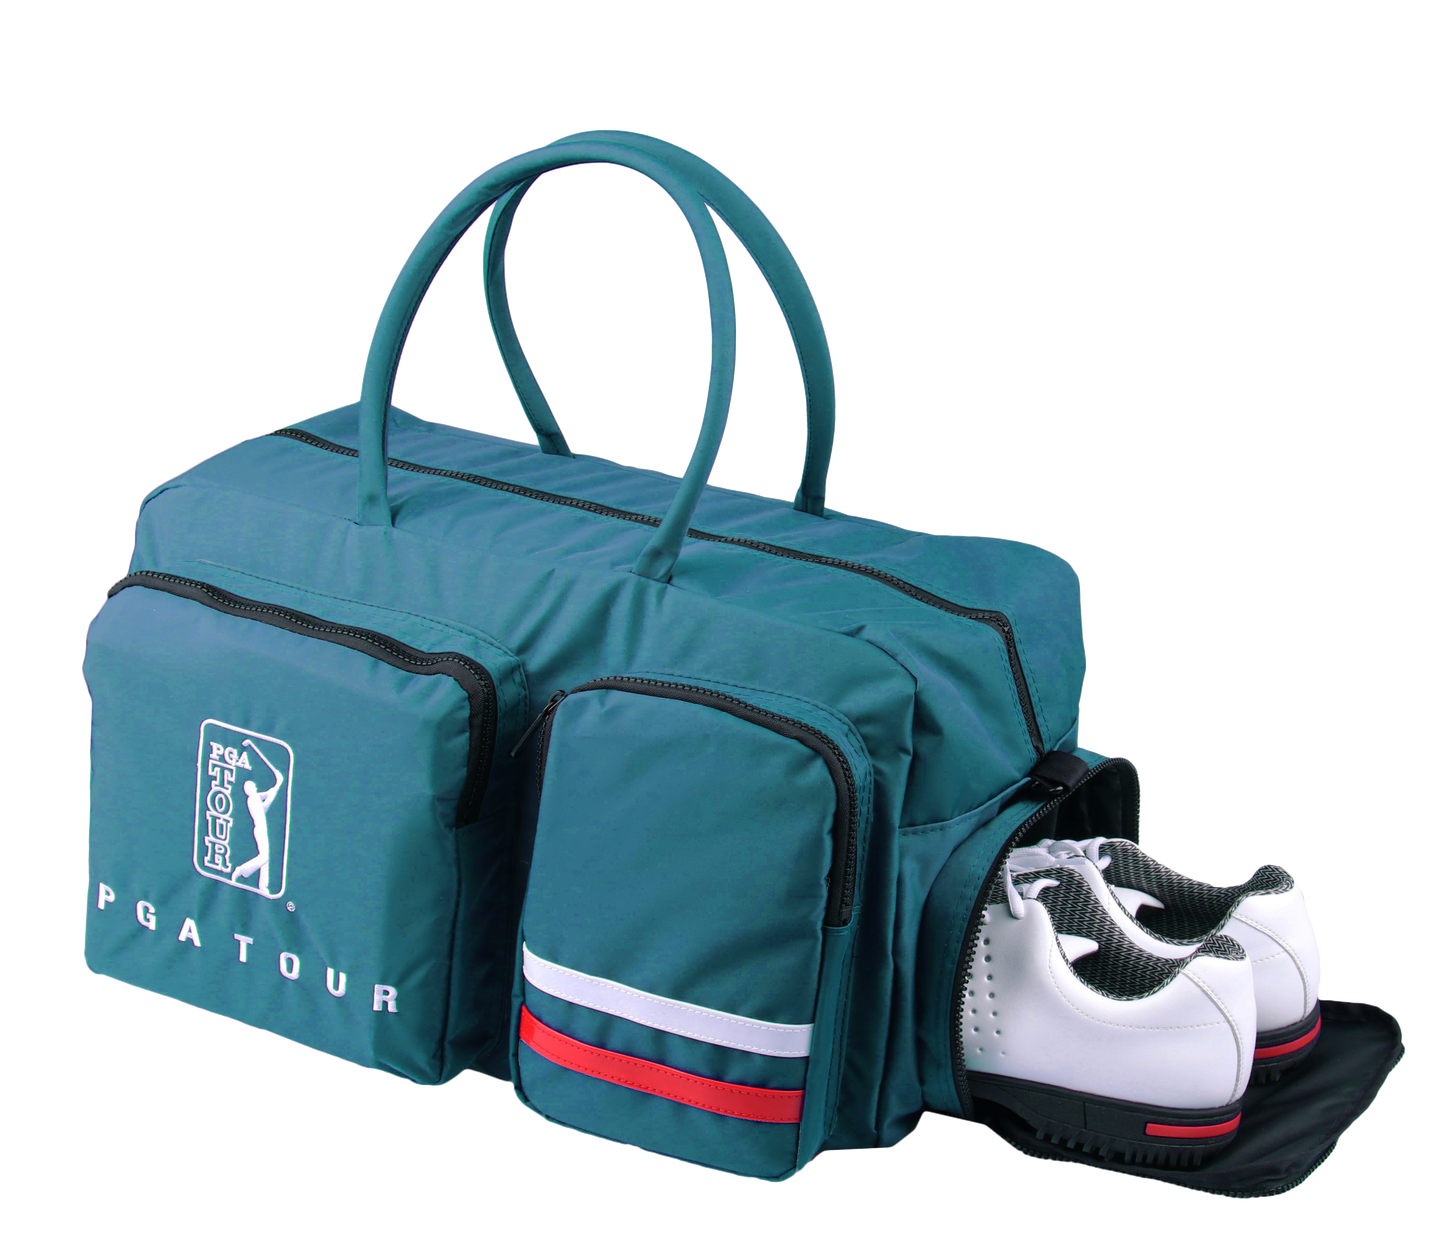 PGA 軟布衣物袋(暗綠)